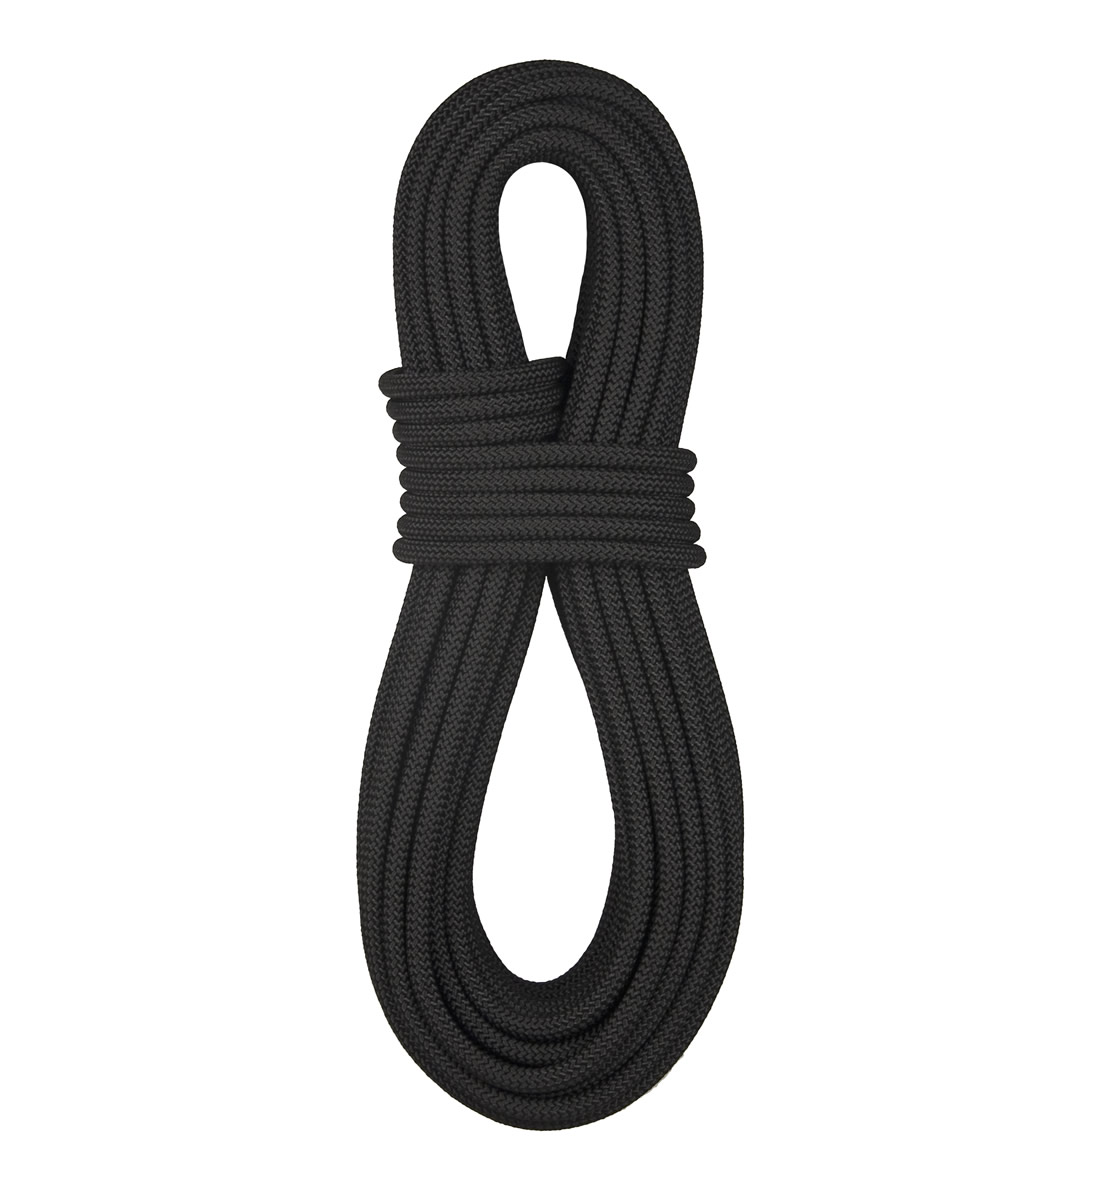 11mm climbing rope